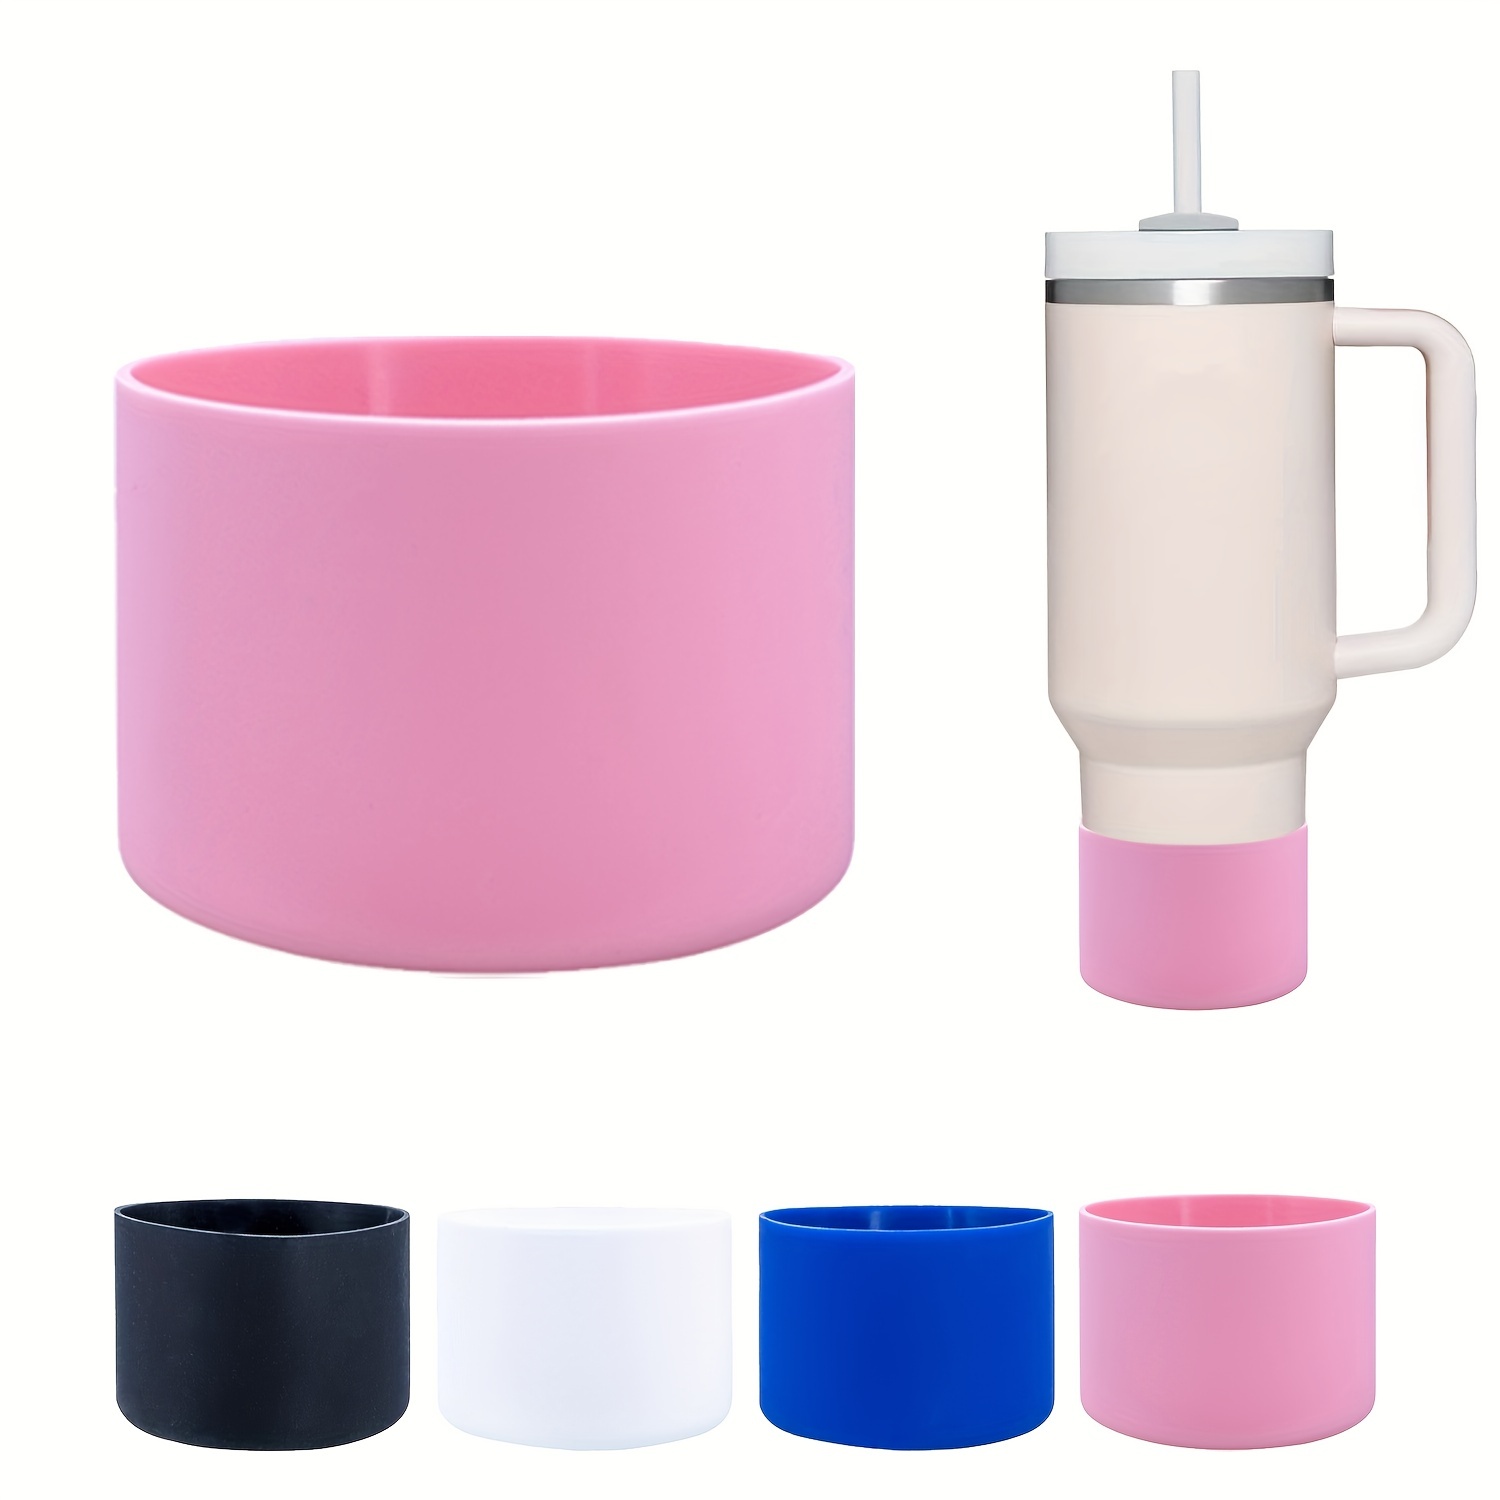 Vaso plegable de silicona de 480 ml rosado reutilizable